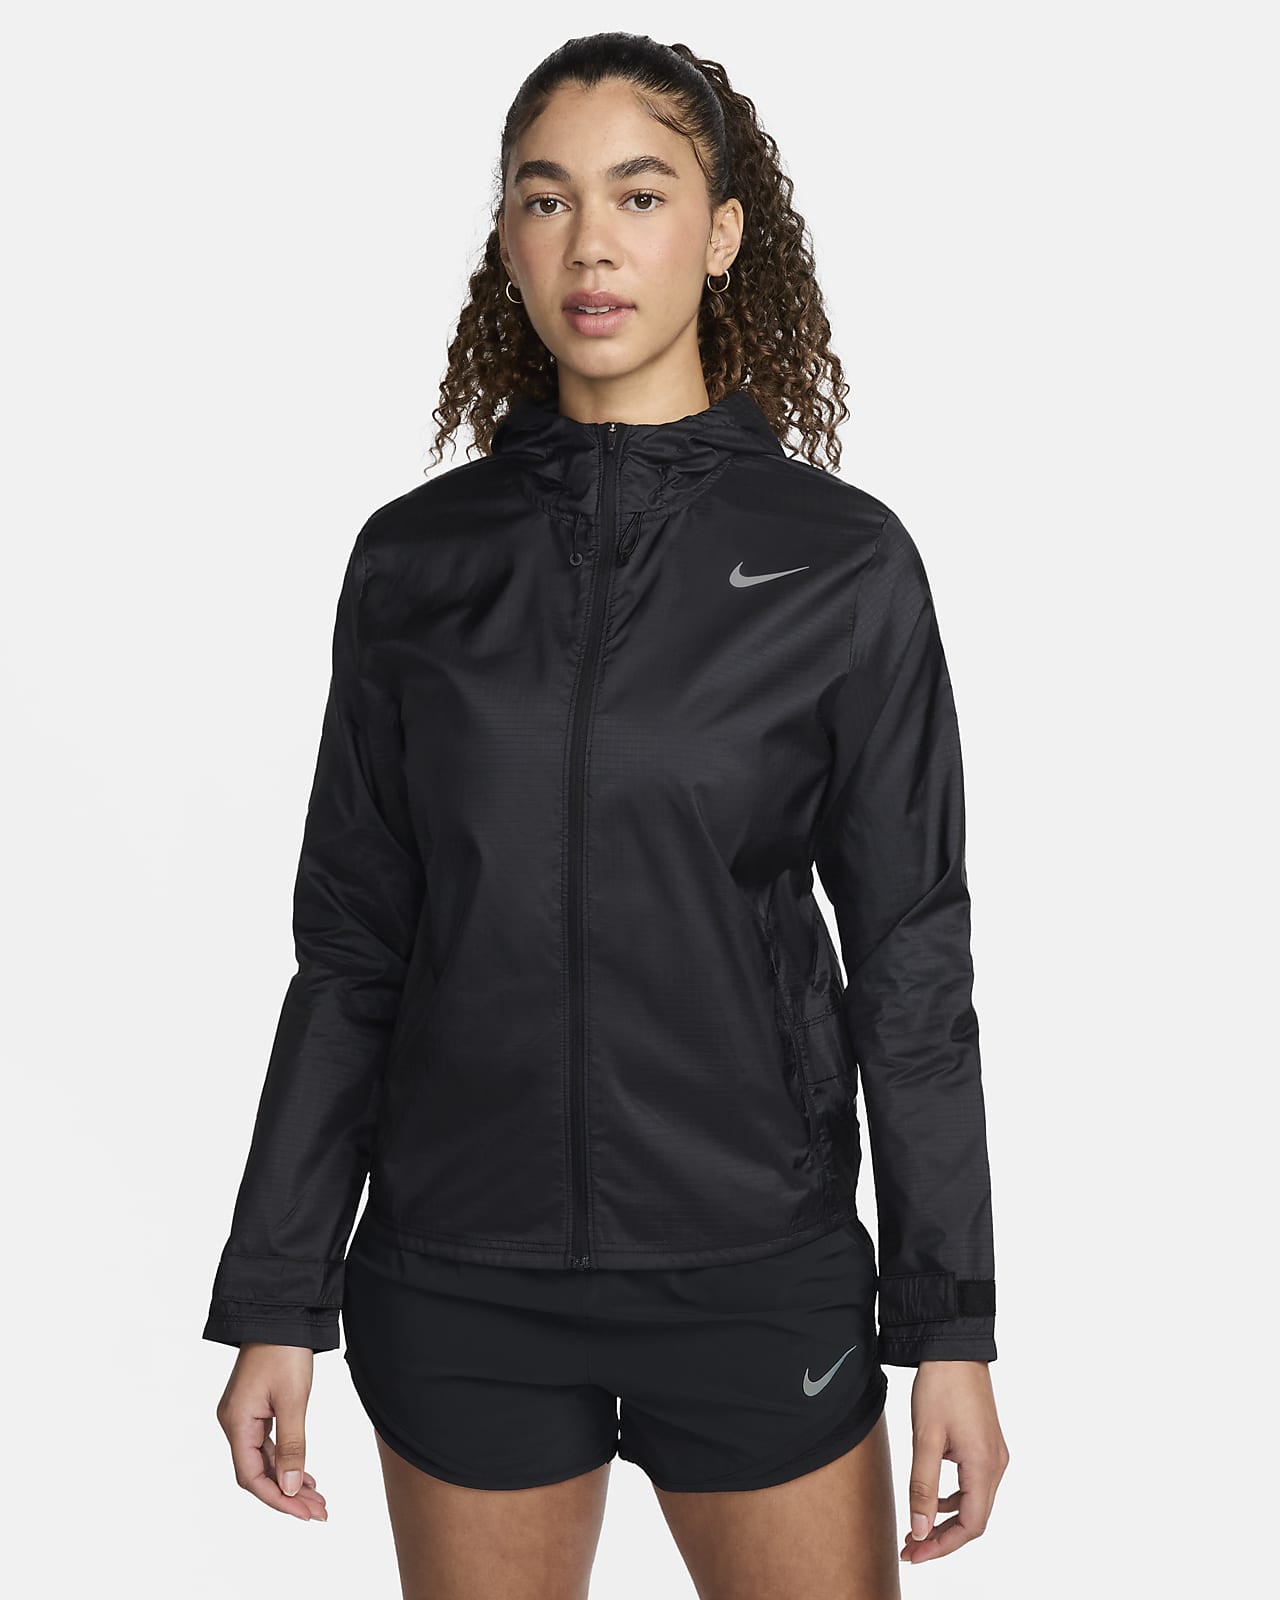 Nike Essential Women's Running Jacket. CA